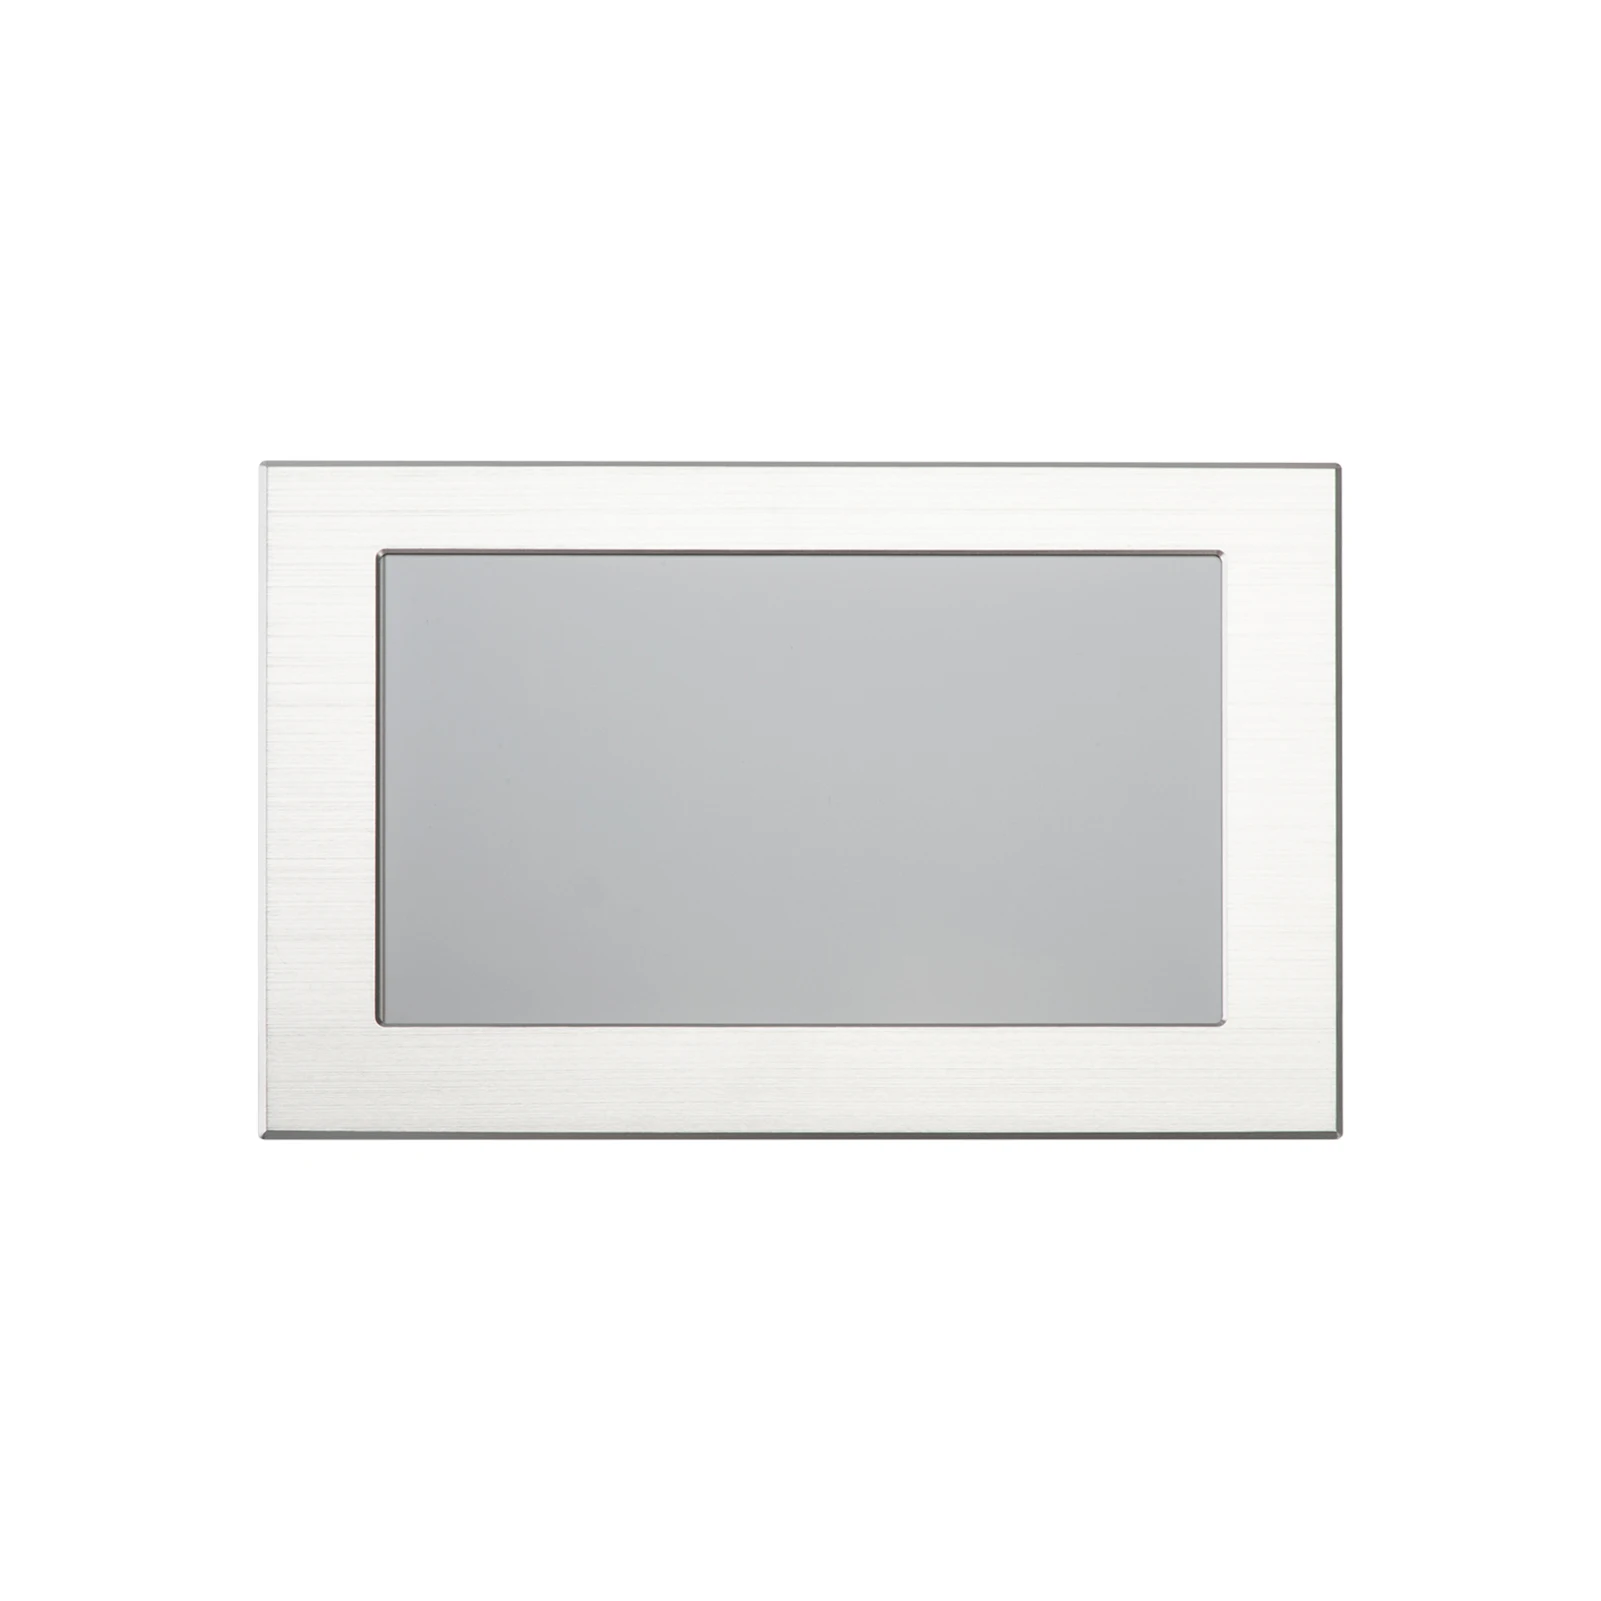 10.1 inch Metal Frame for STONE HMI Smart LCD Display Module STWI101WT-01